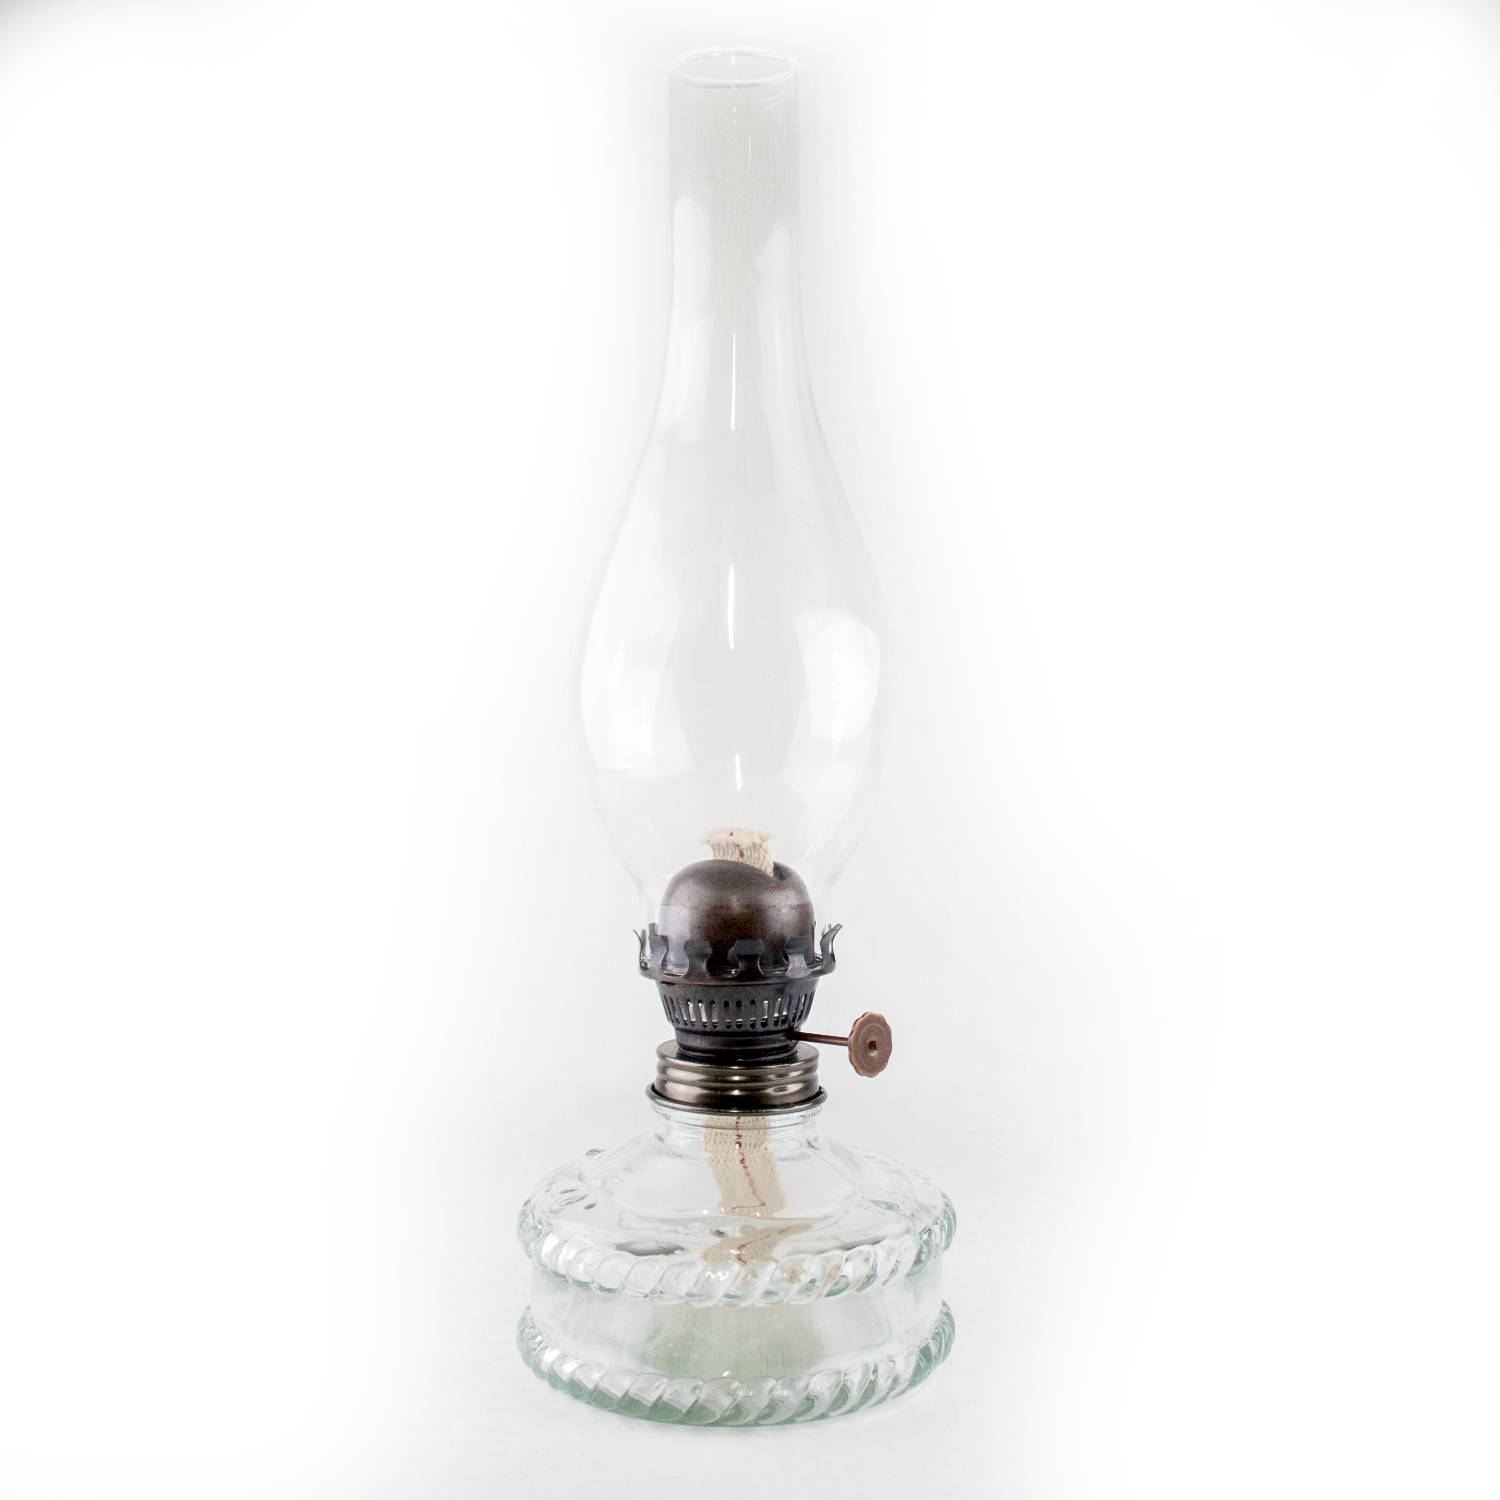 Mirror Lamp, Decorative Oil Lamp with Reflector | Lehman's